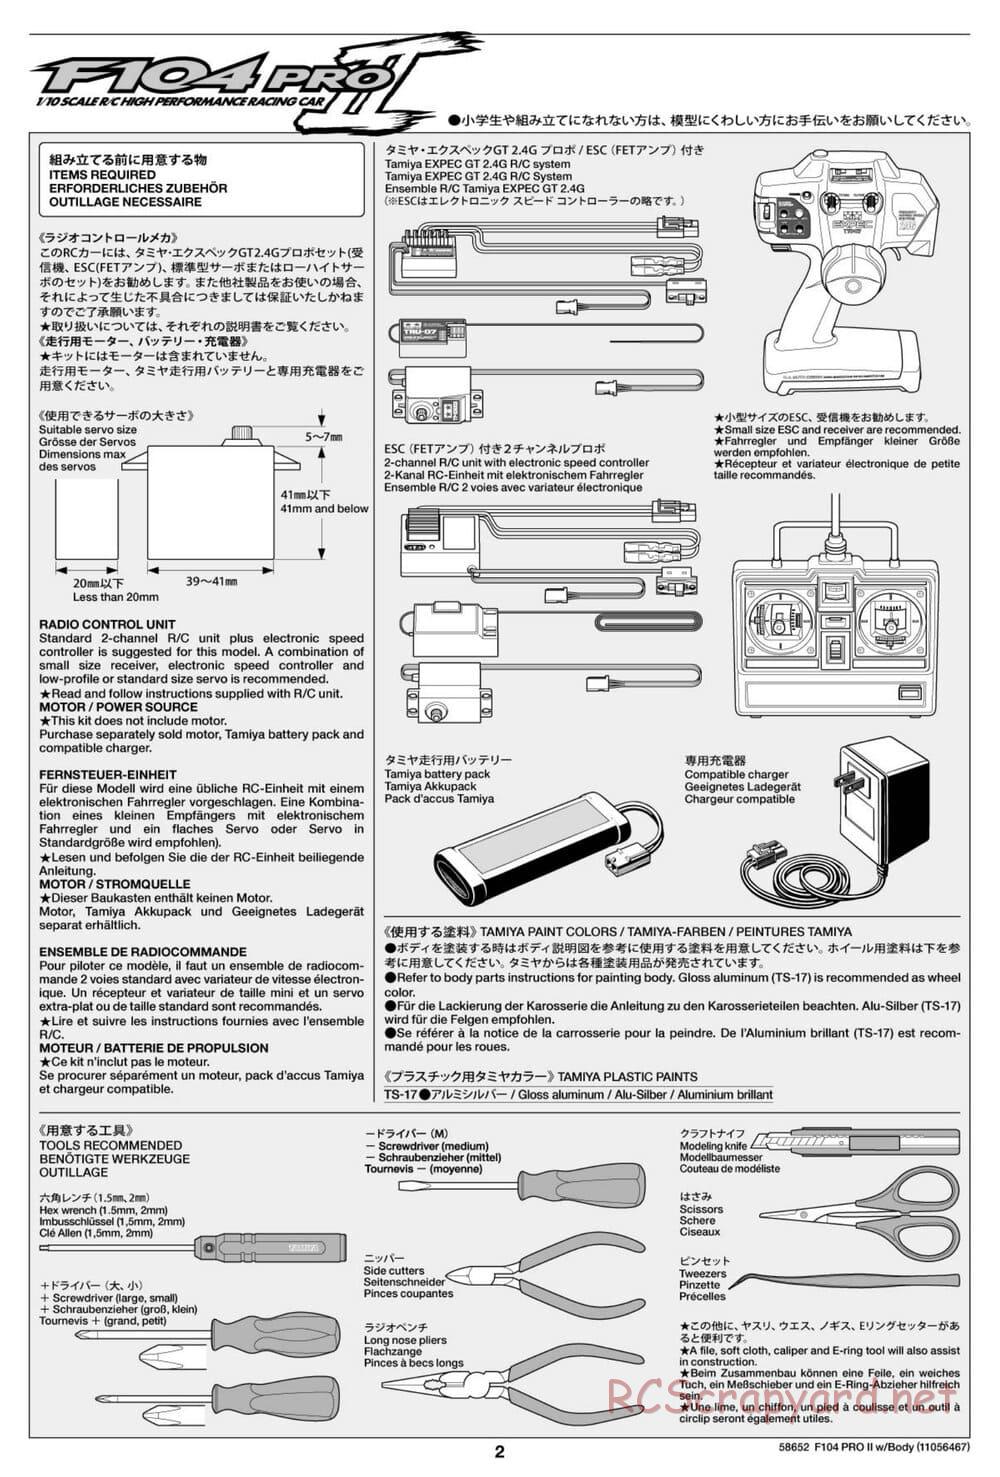 Tamiya - F104 Pro II Chassis - Manual - Page 2